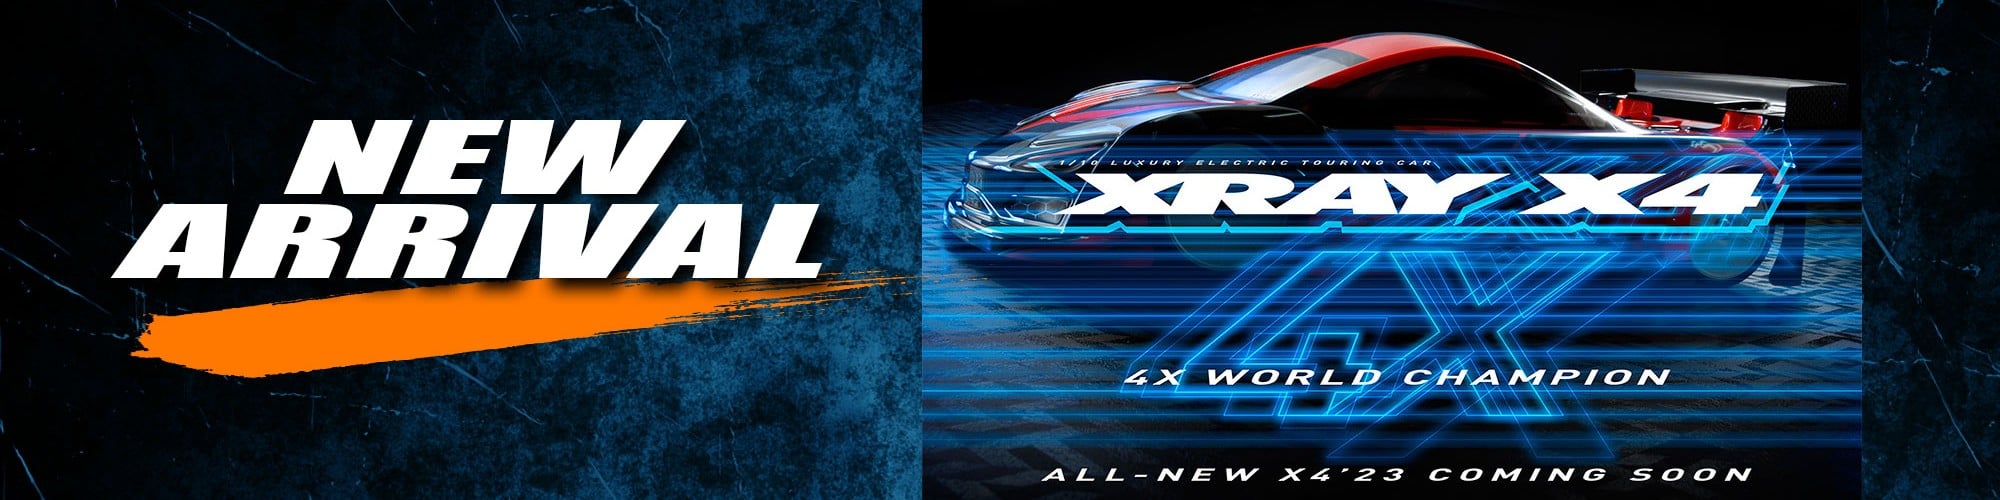 Xray X4'23 Touring Car